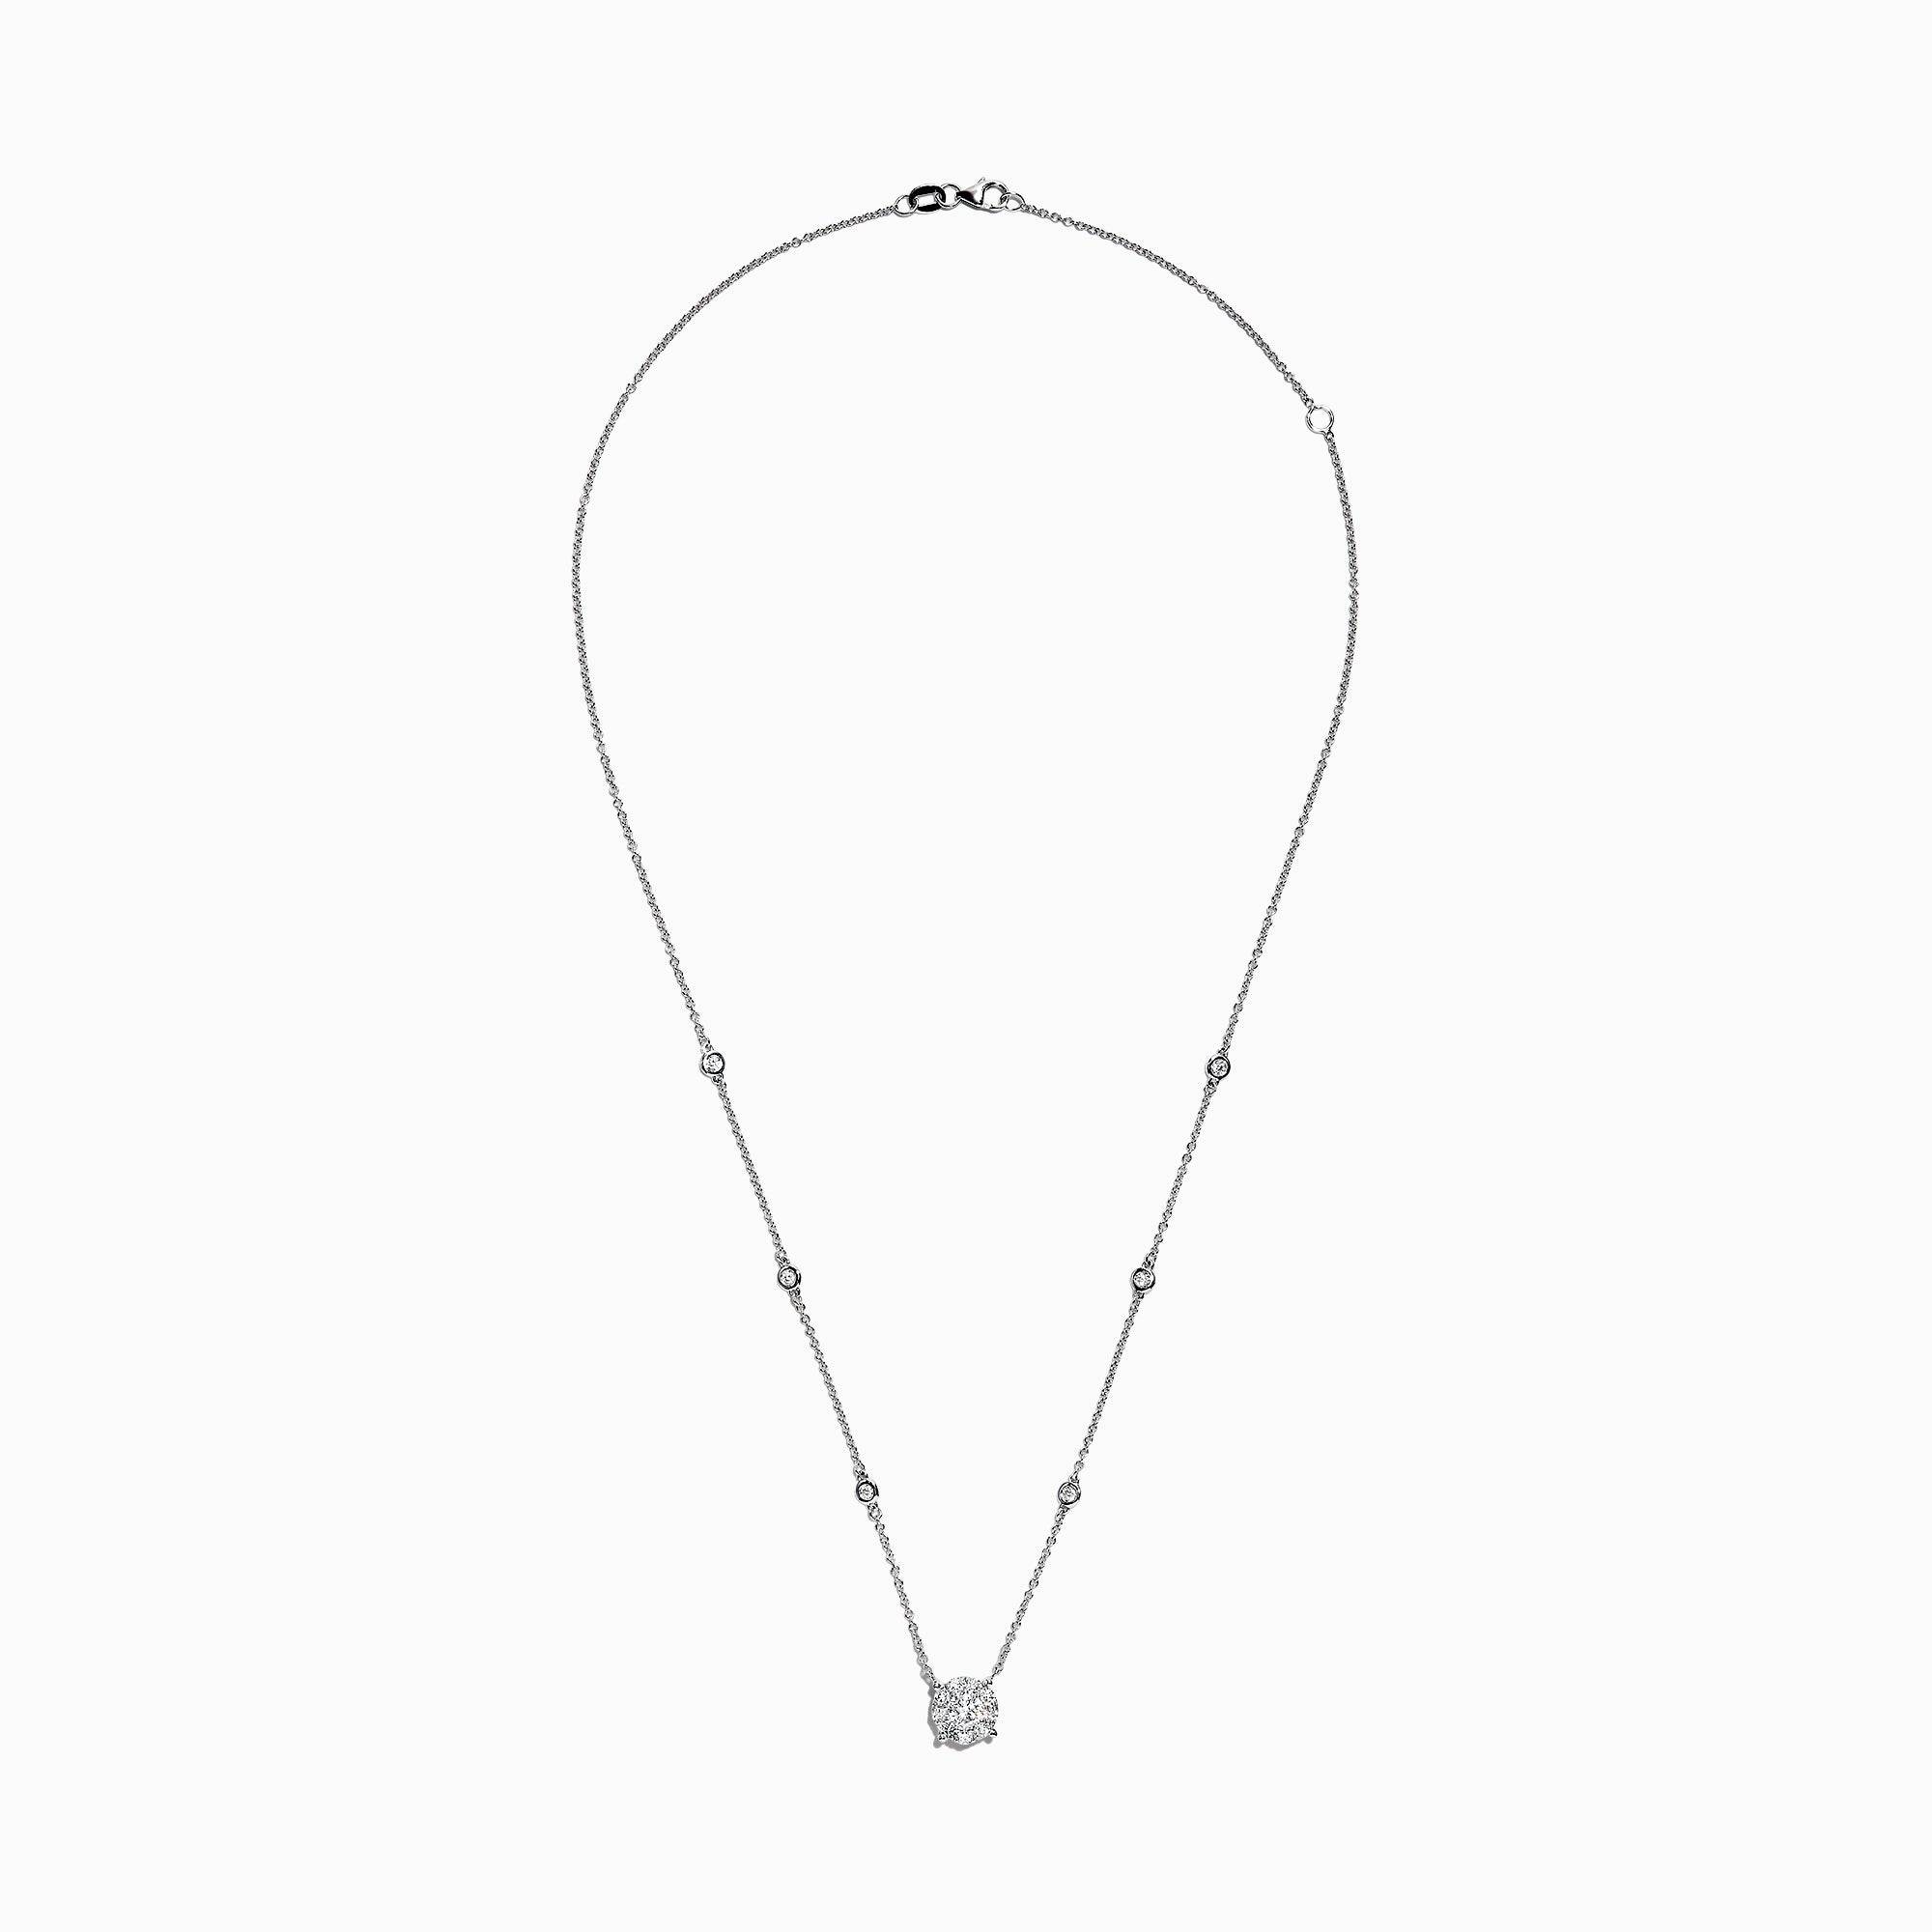 Effy Pave Classica 14K White Gold Diamond Necklace, 0.82 TCW